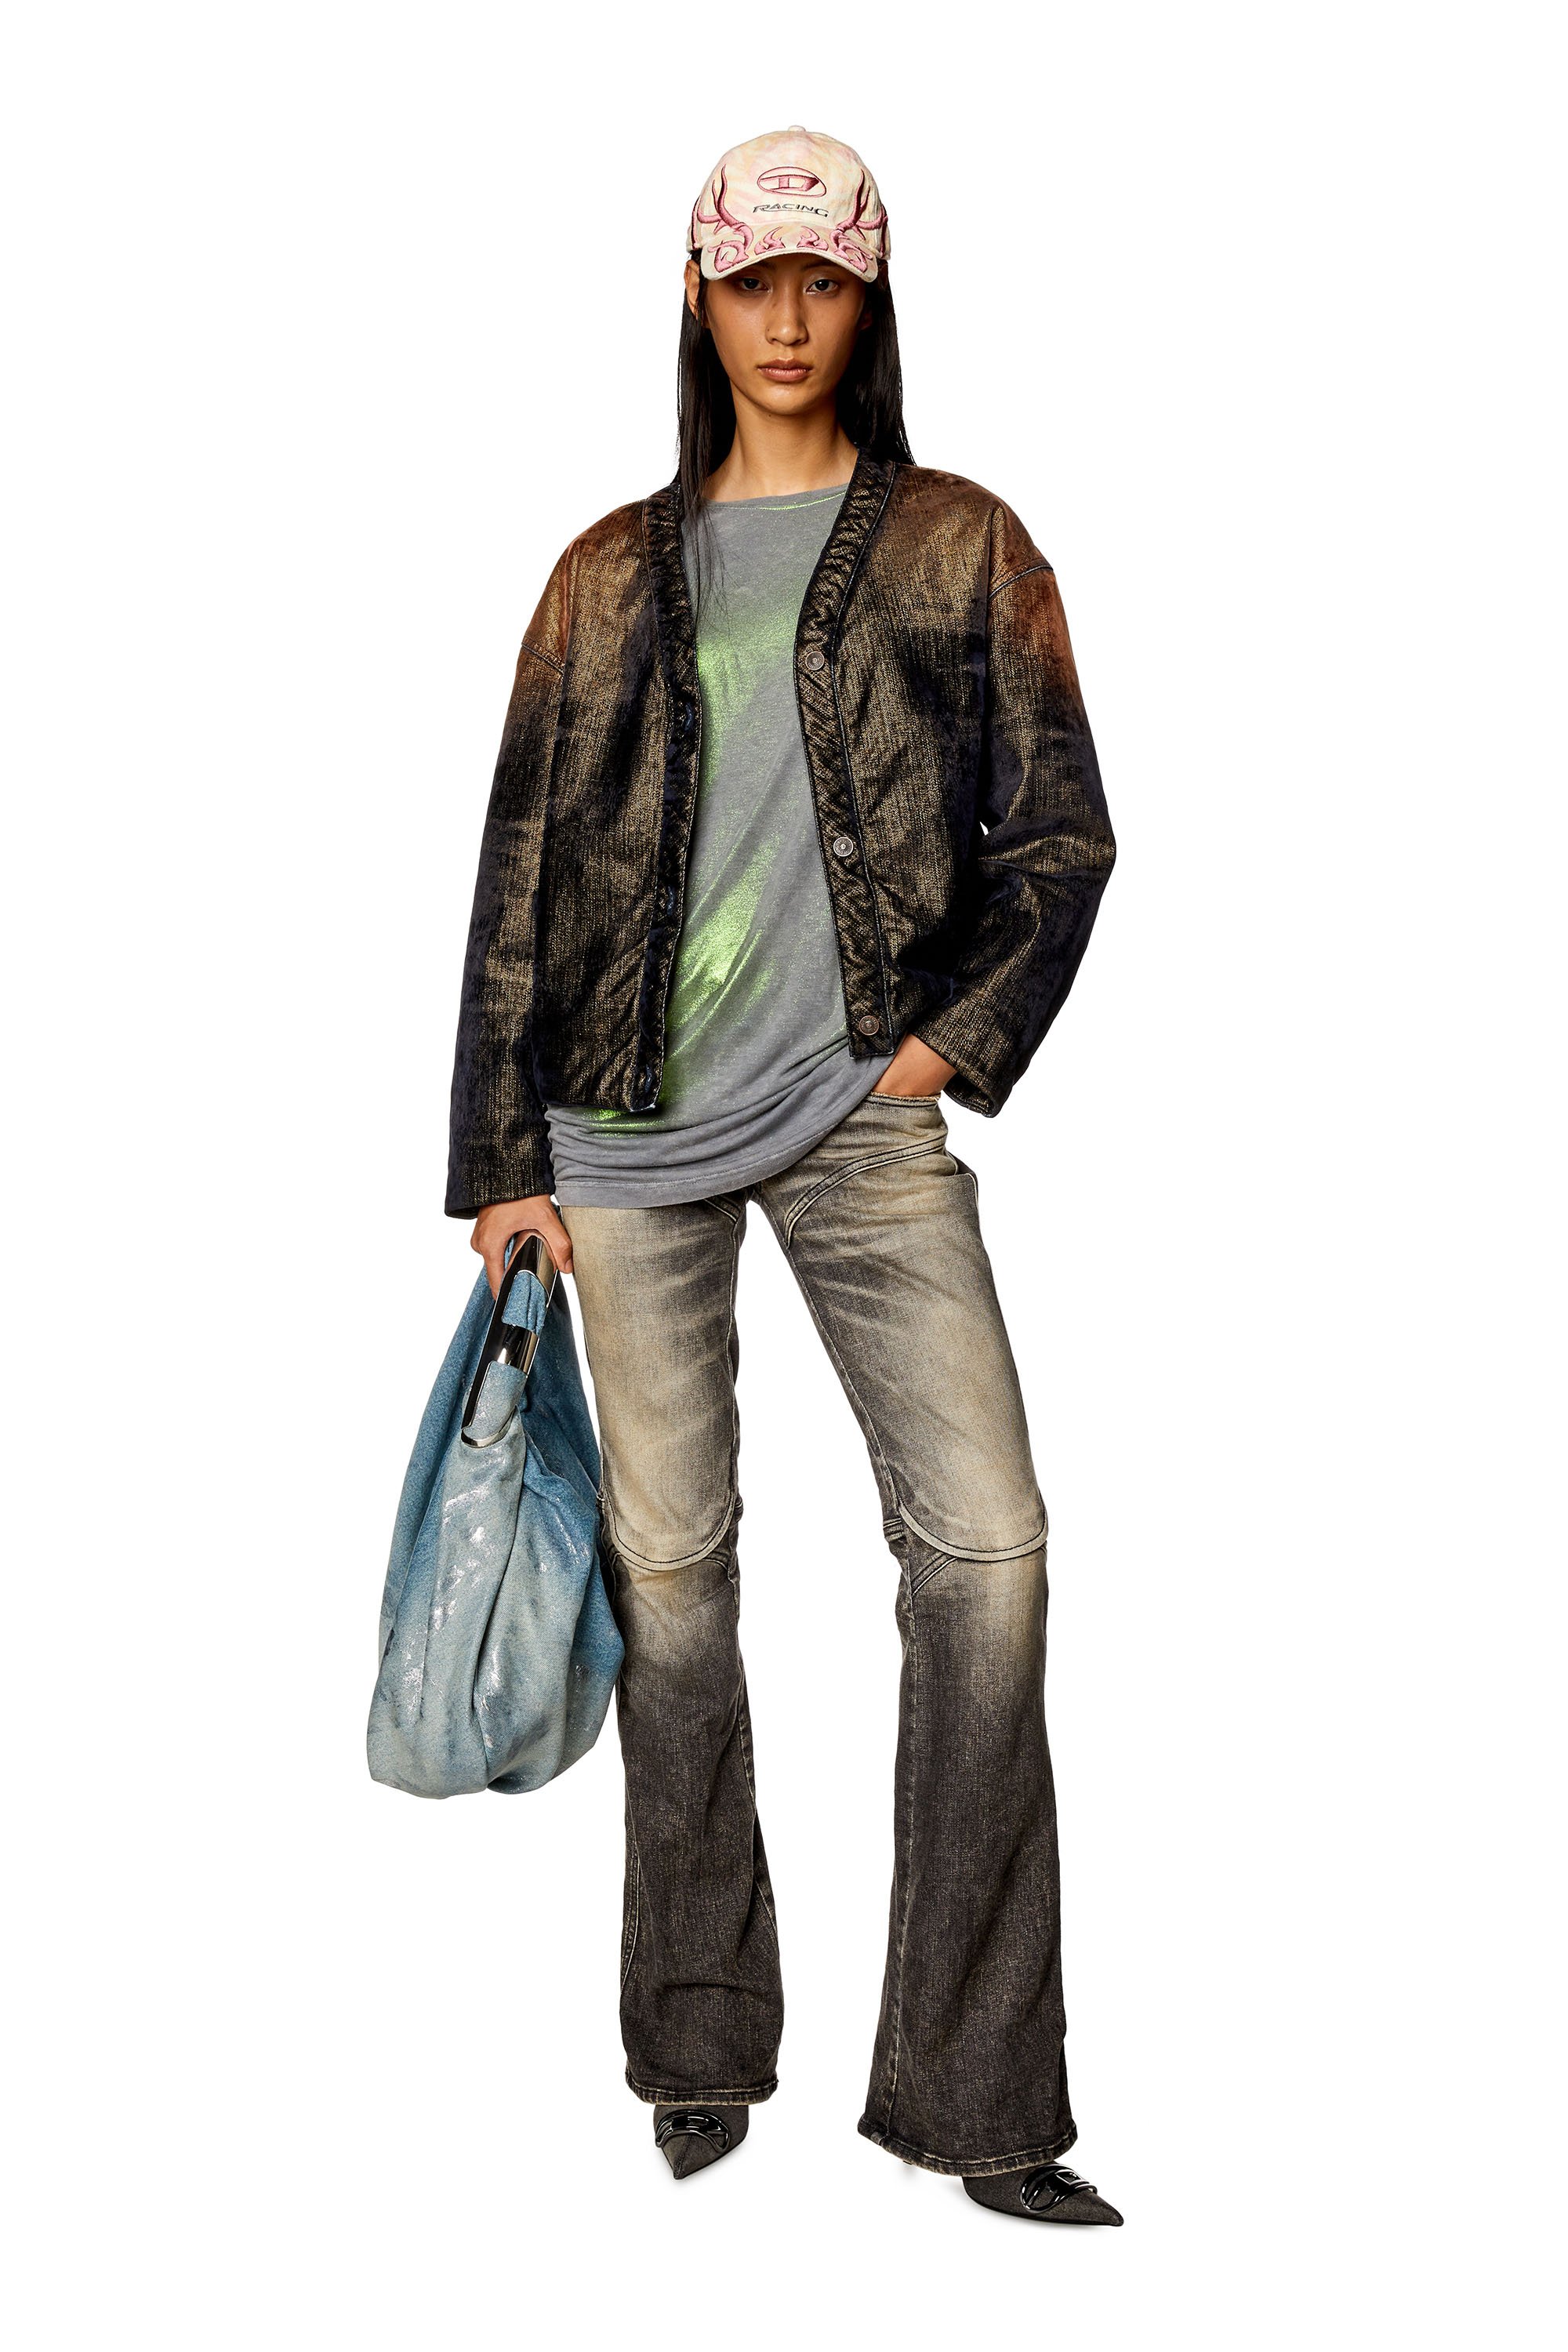 Diesel - DE-CONF-S, Female Jacket in shimmery denim in Multicolor - Image 2